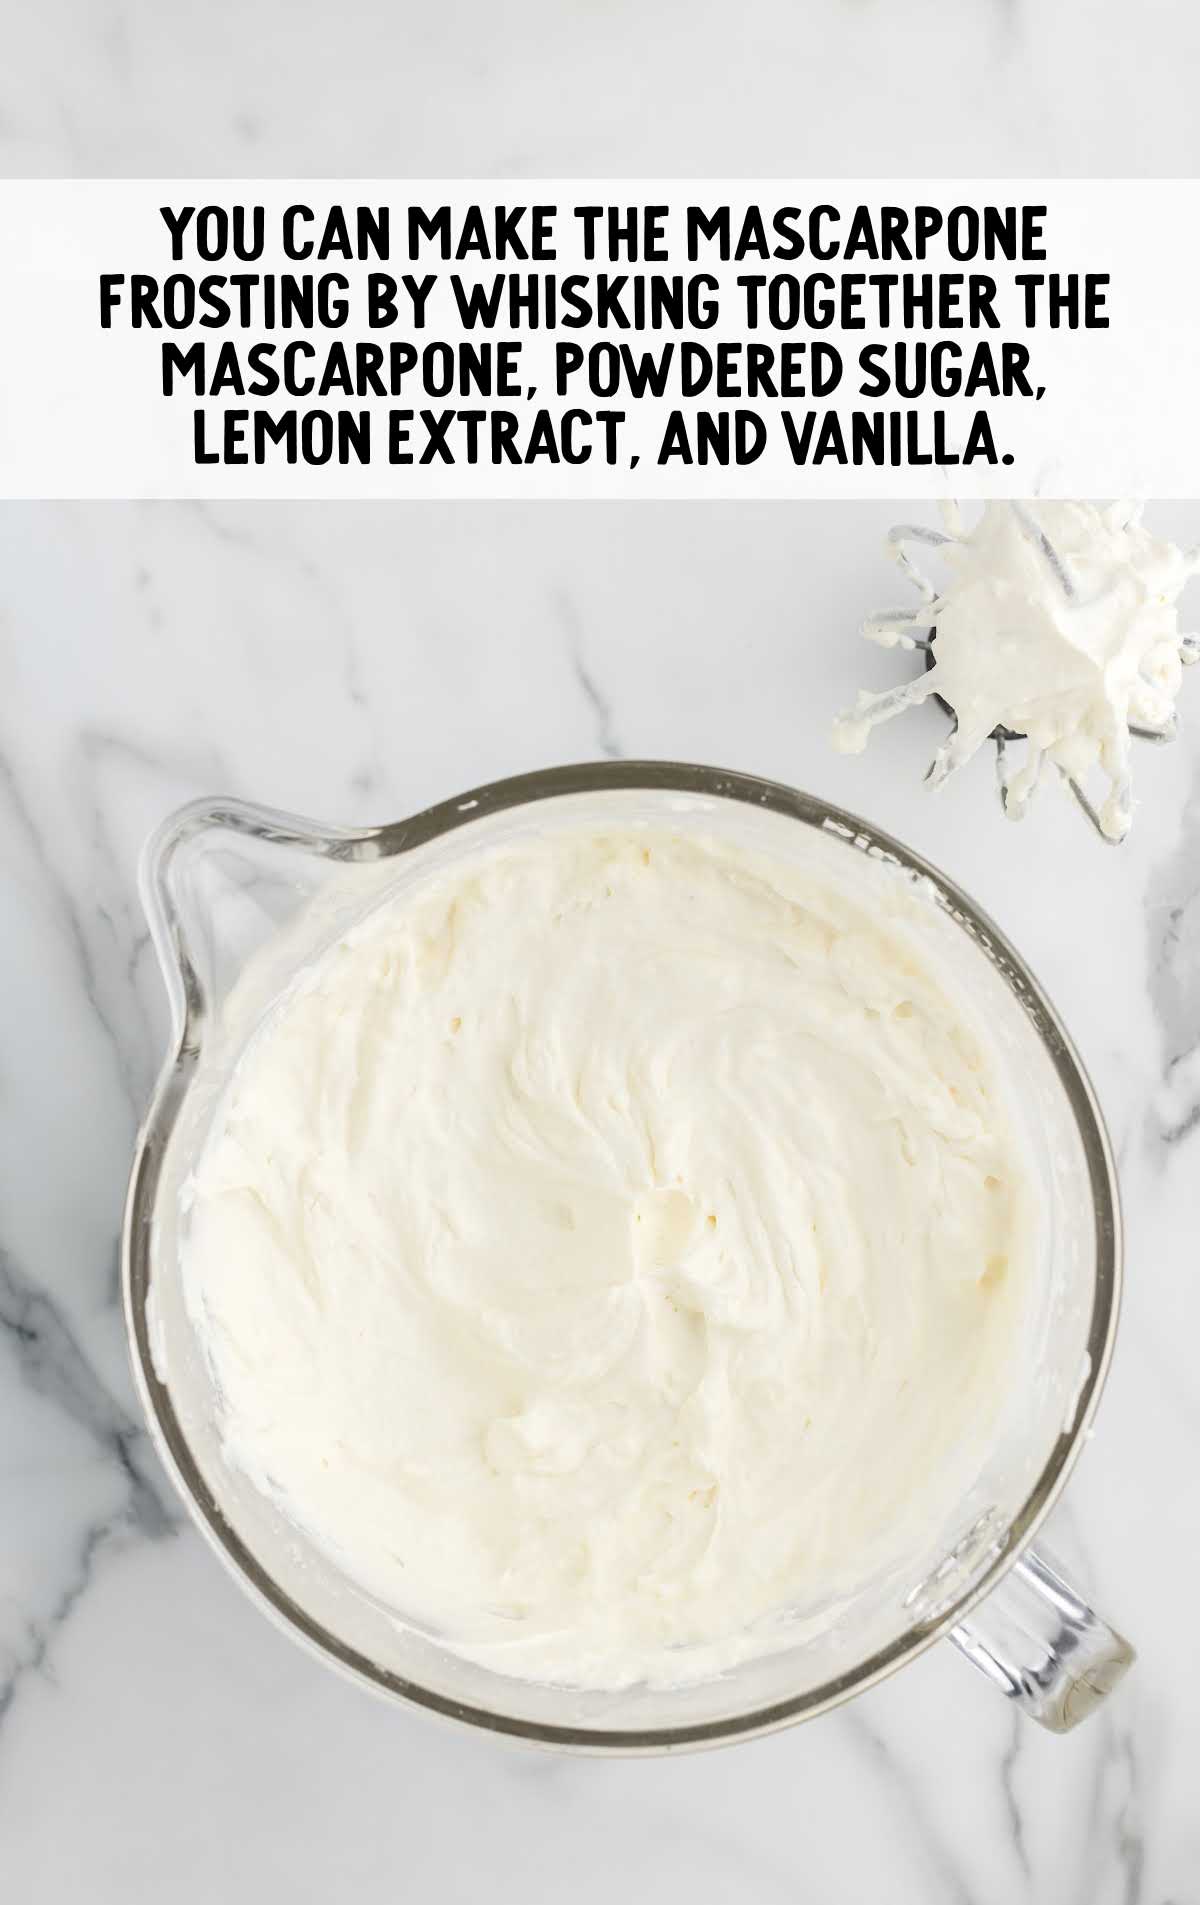 mascarpone, powdered sugar, lemon extract, and vanilla whisked together